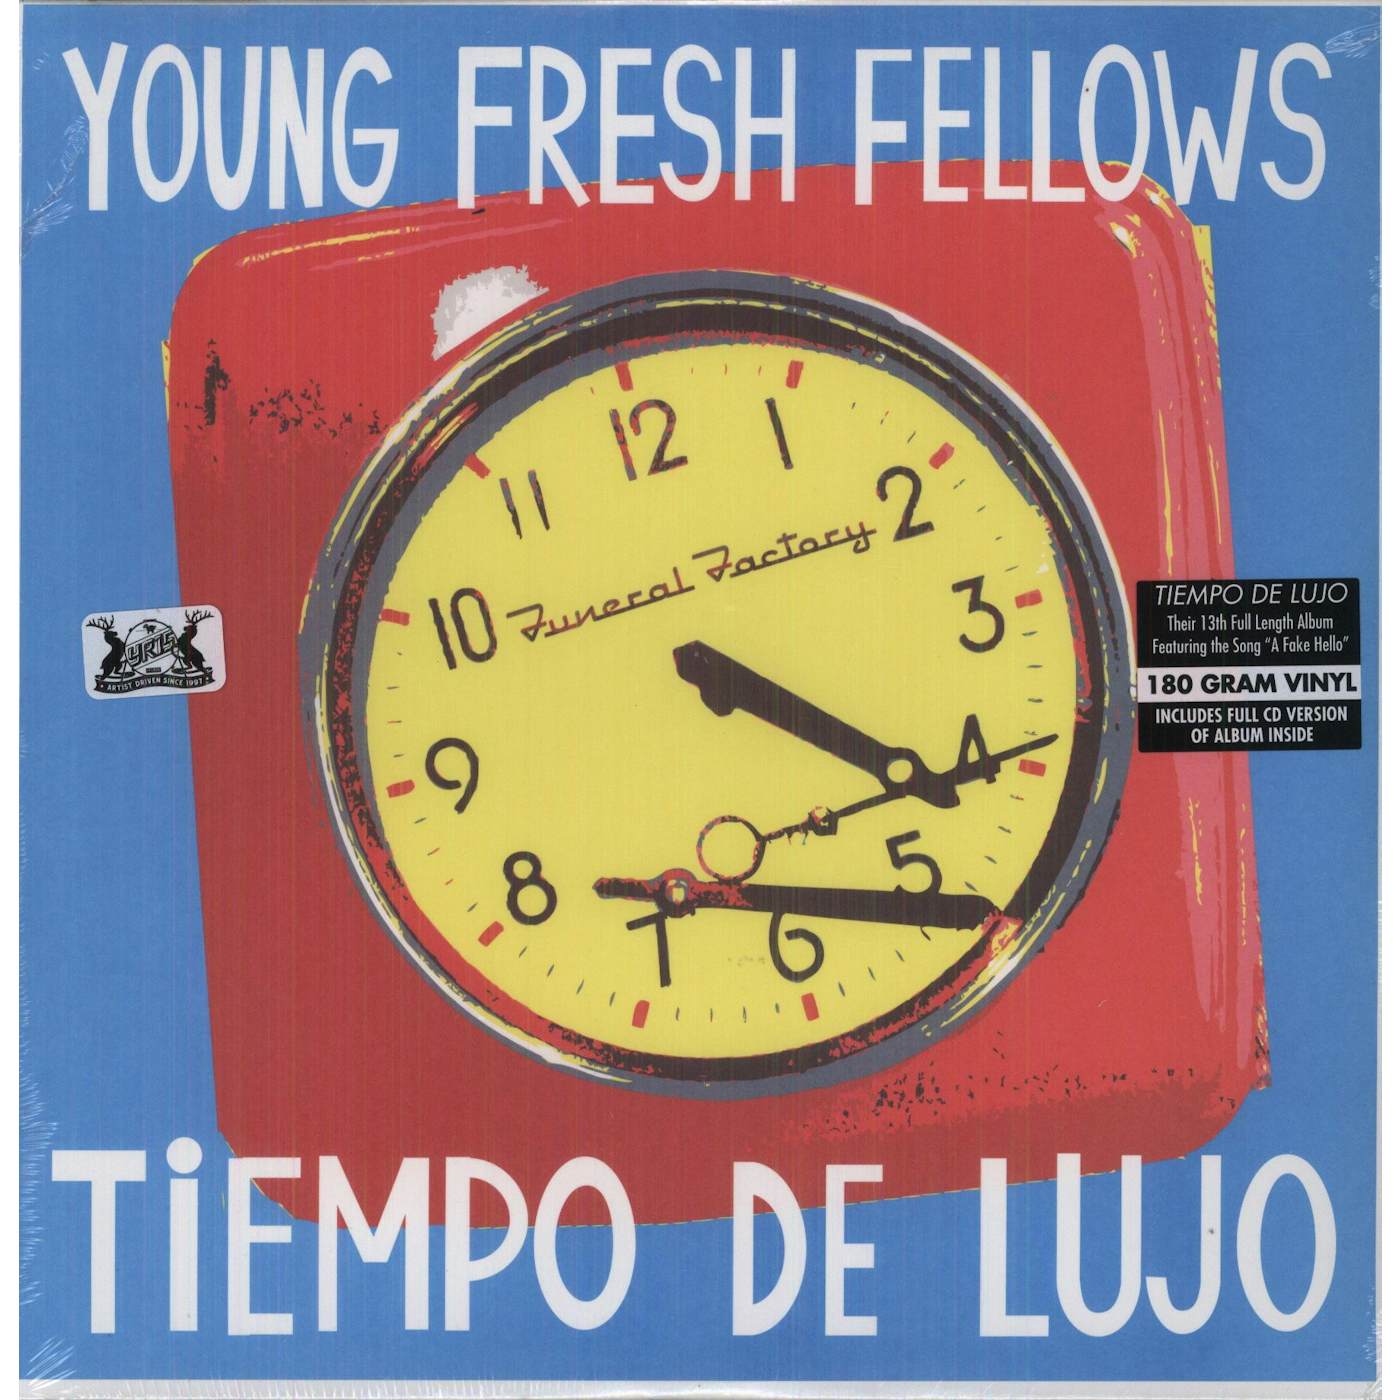 The Young Fresh Fellows Tiempo de Lujo Vinyl Record